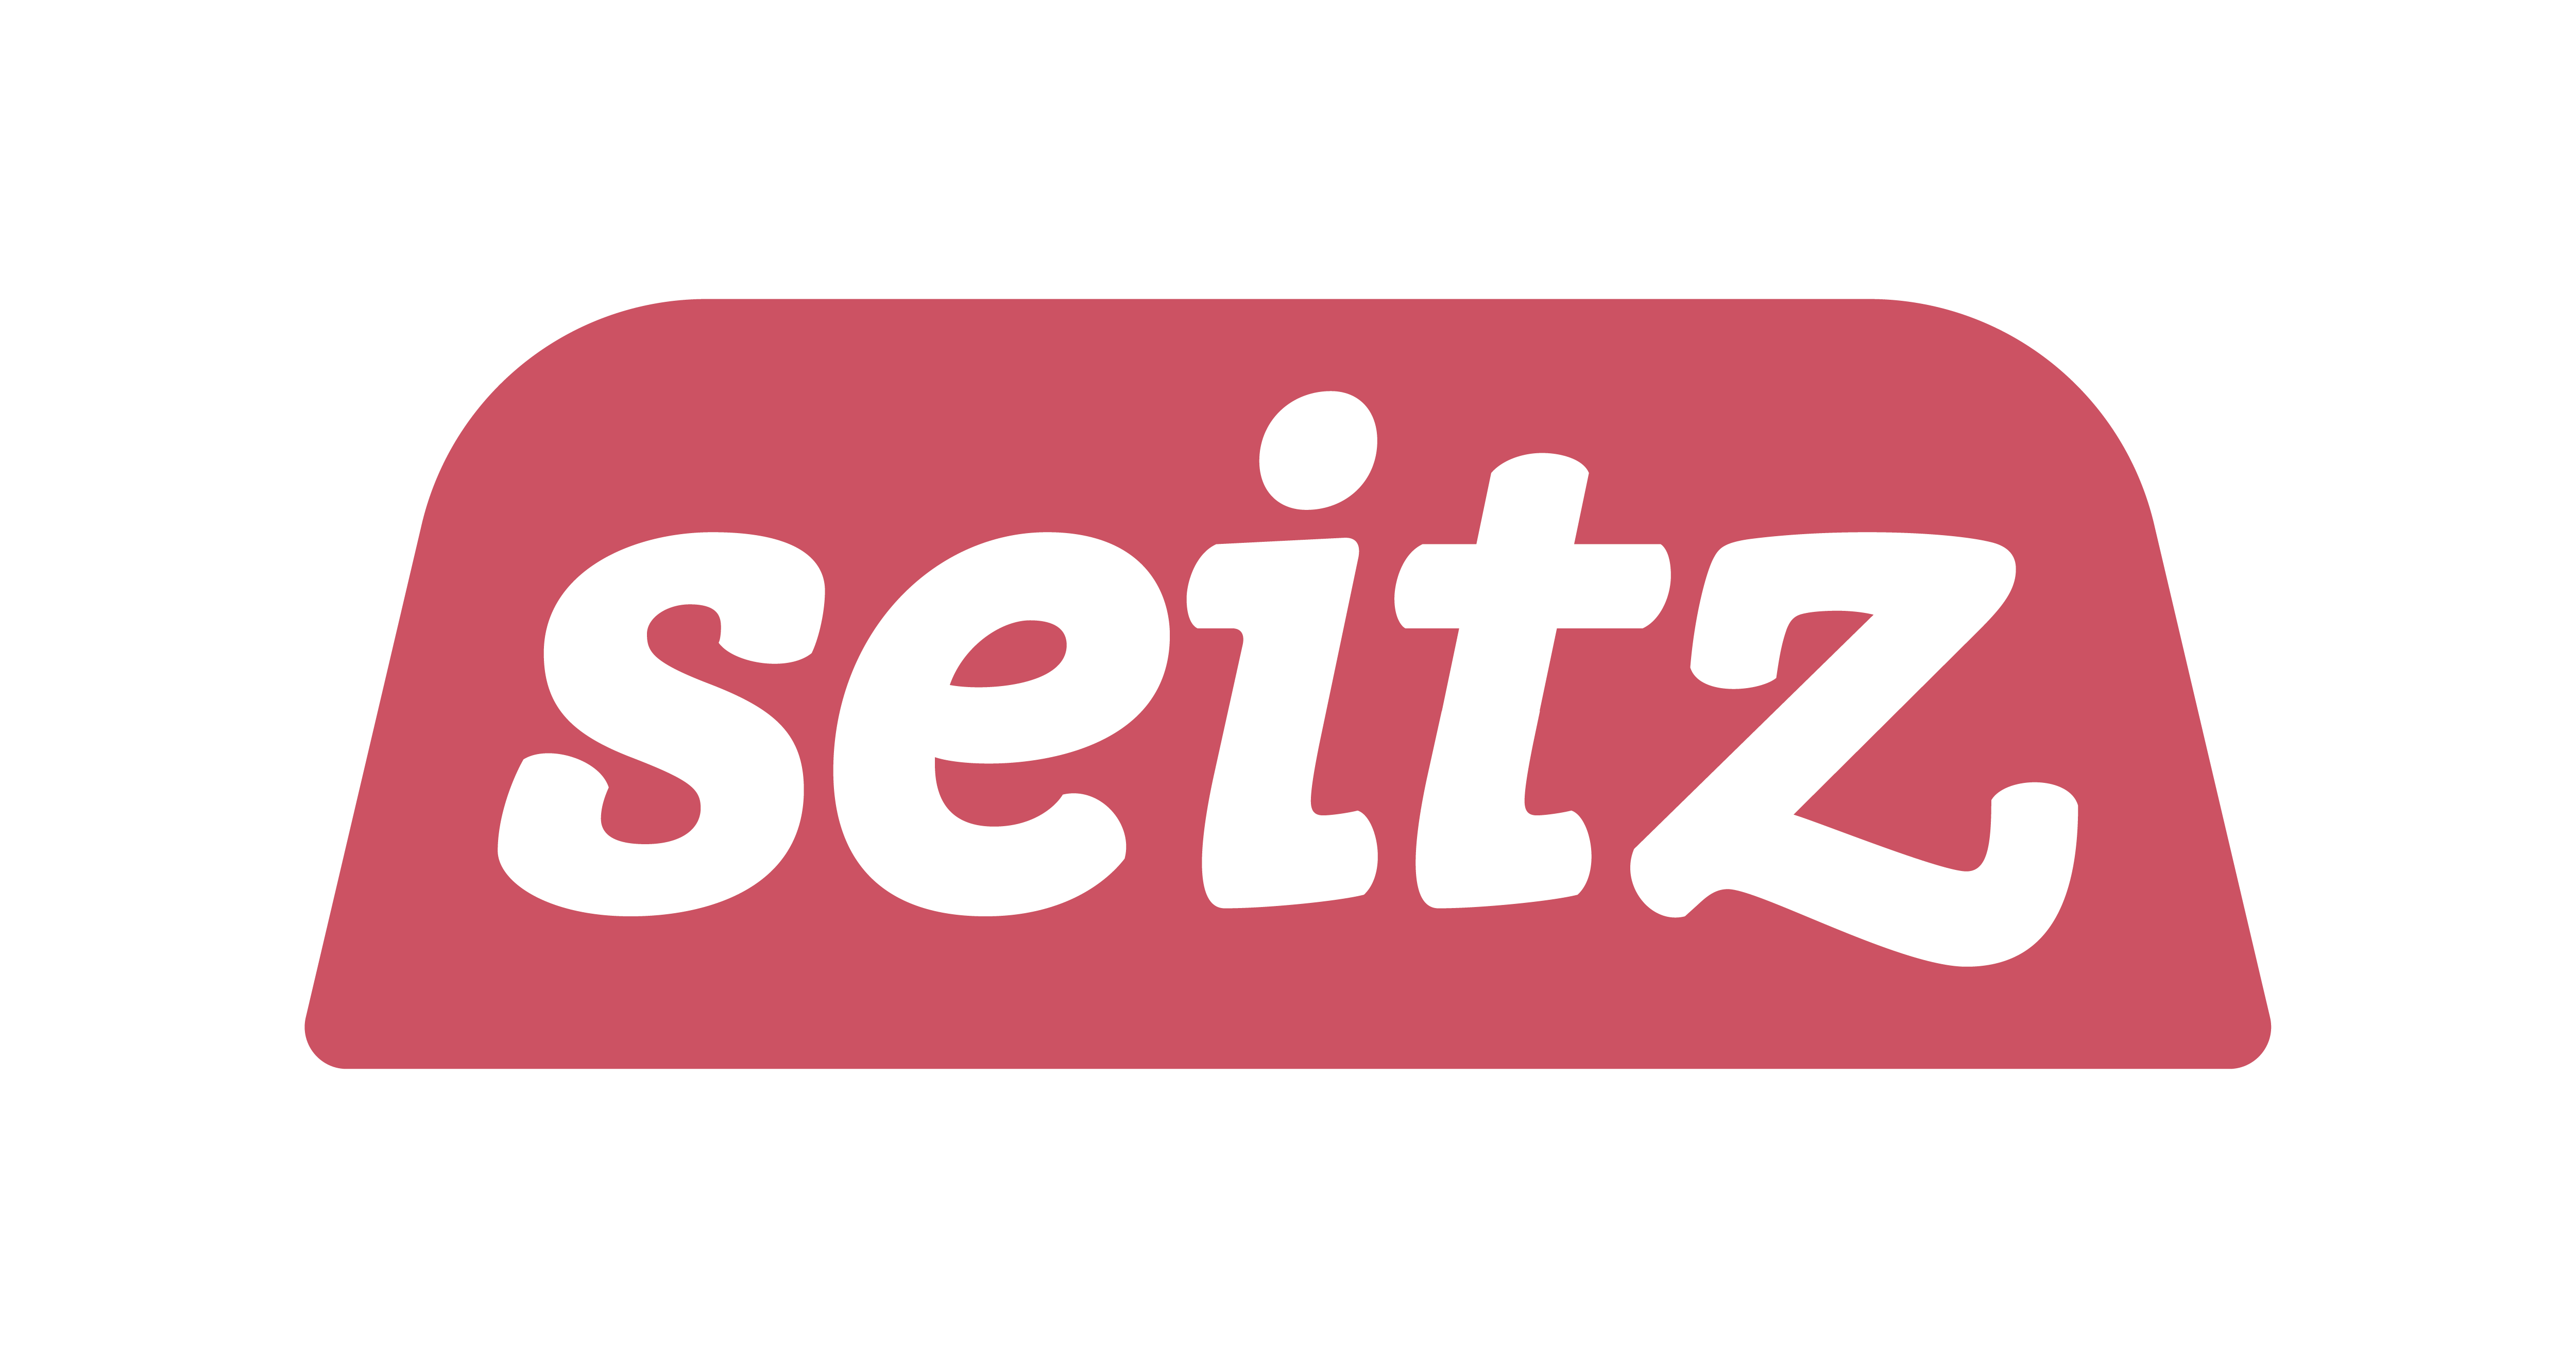 Seitz